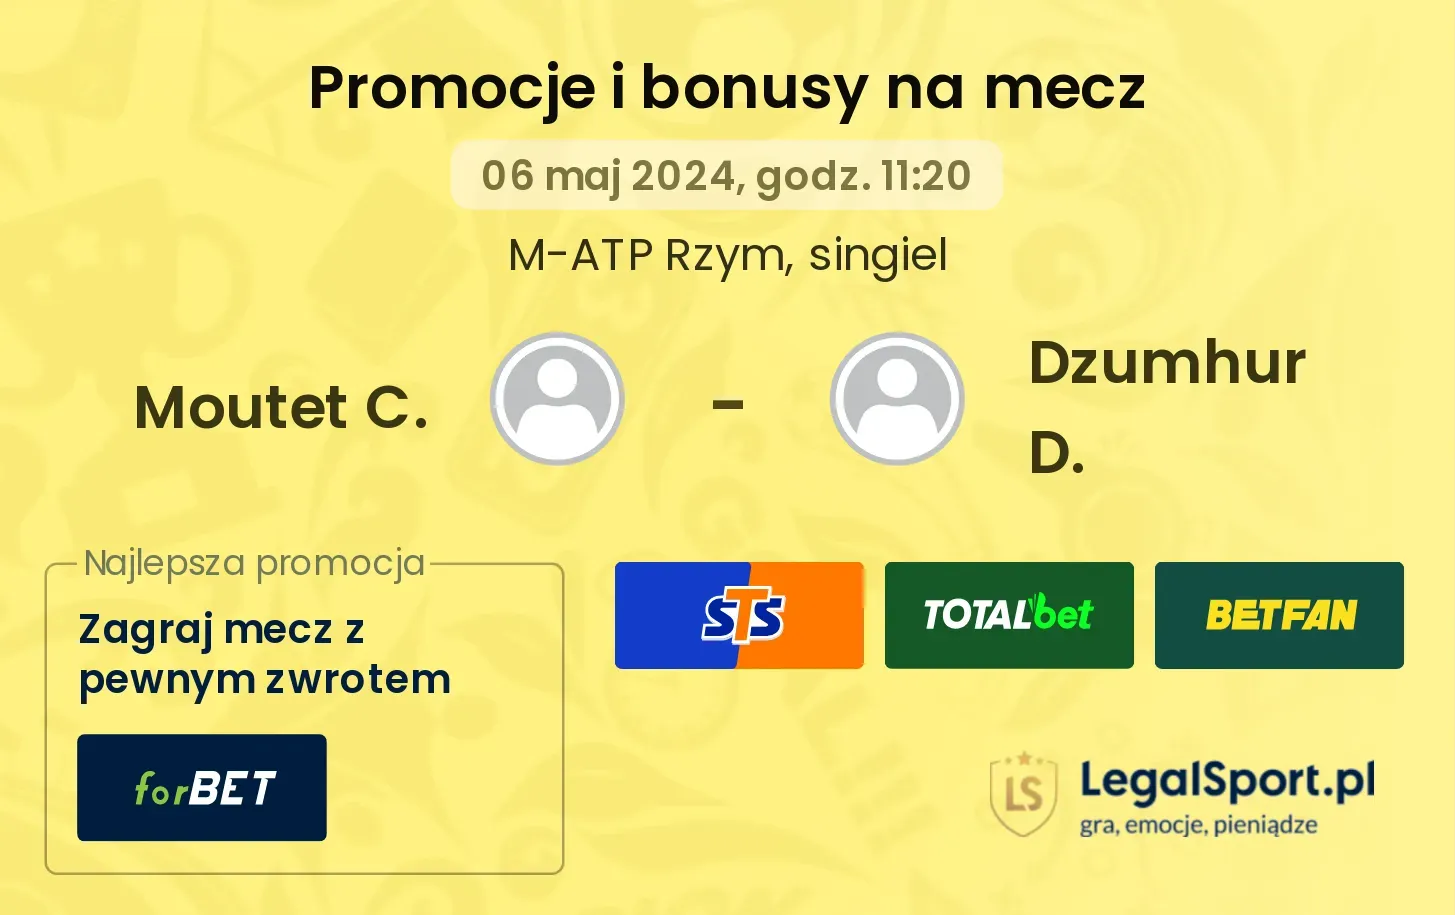 Moutet C. - Dzumhur D. promocje bonusy na mecz